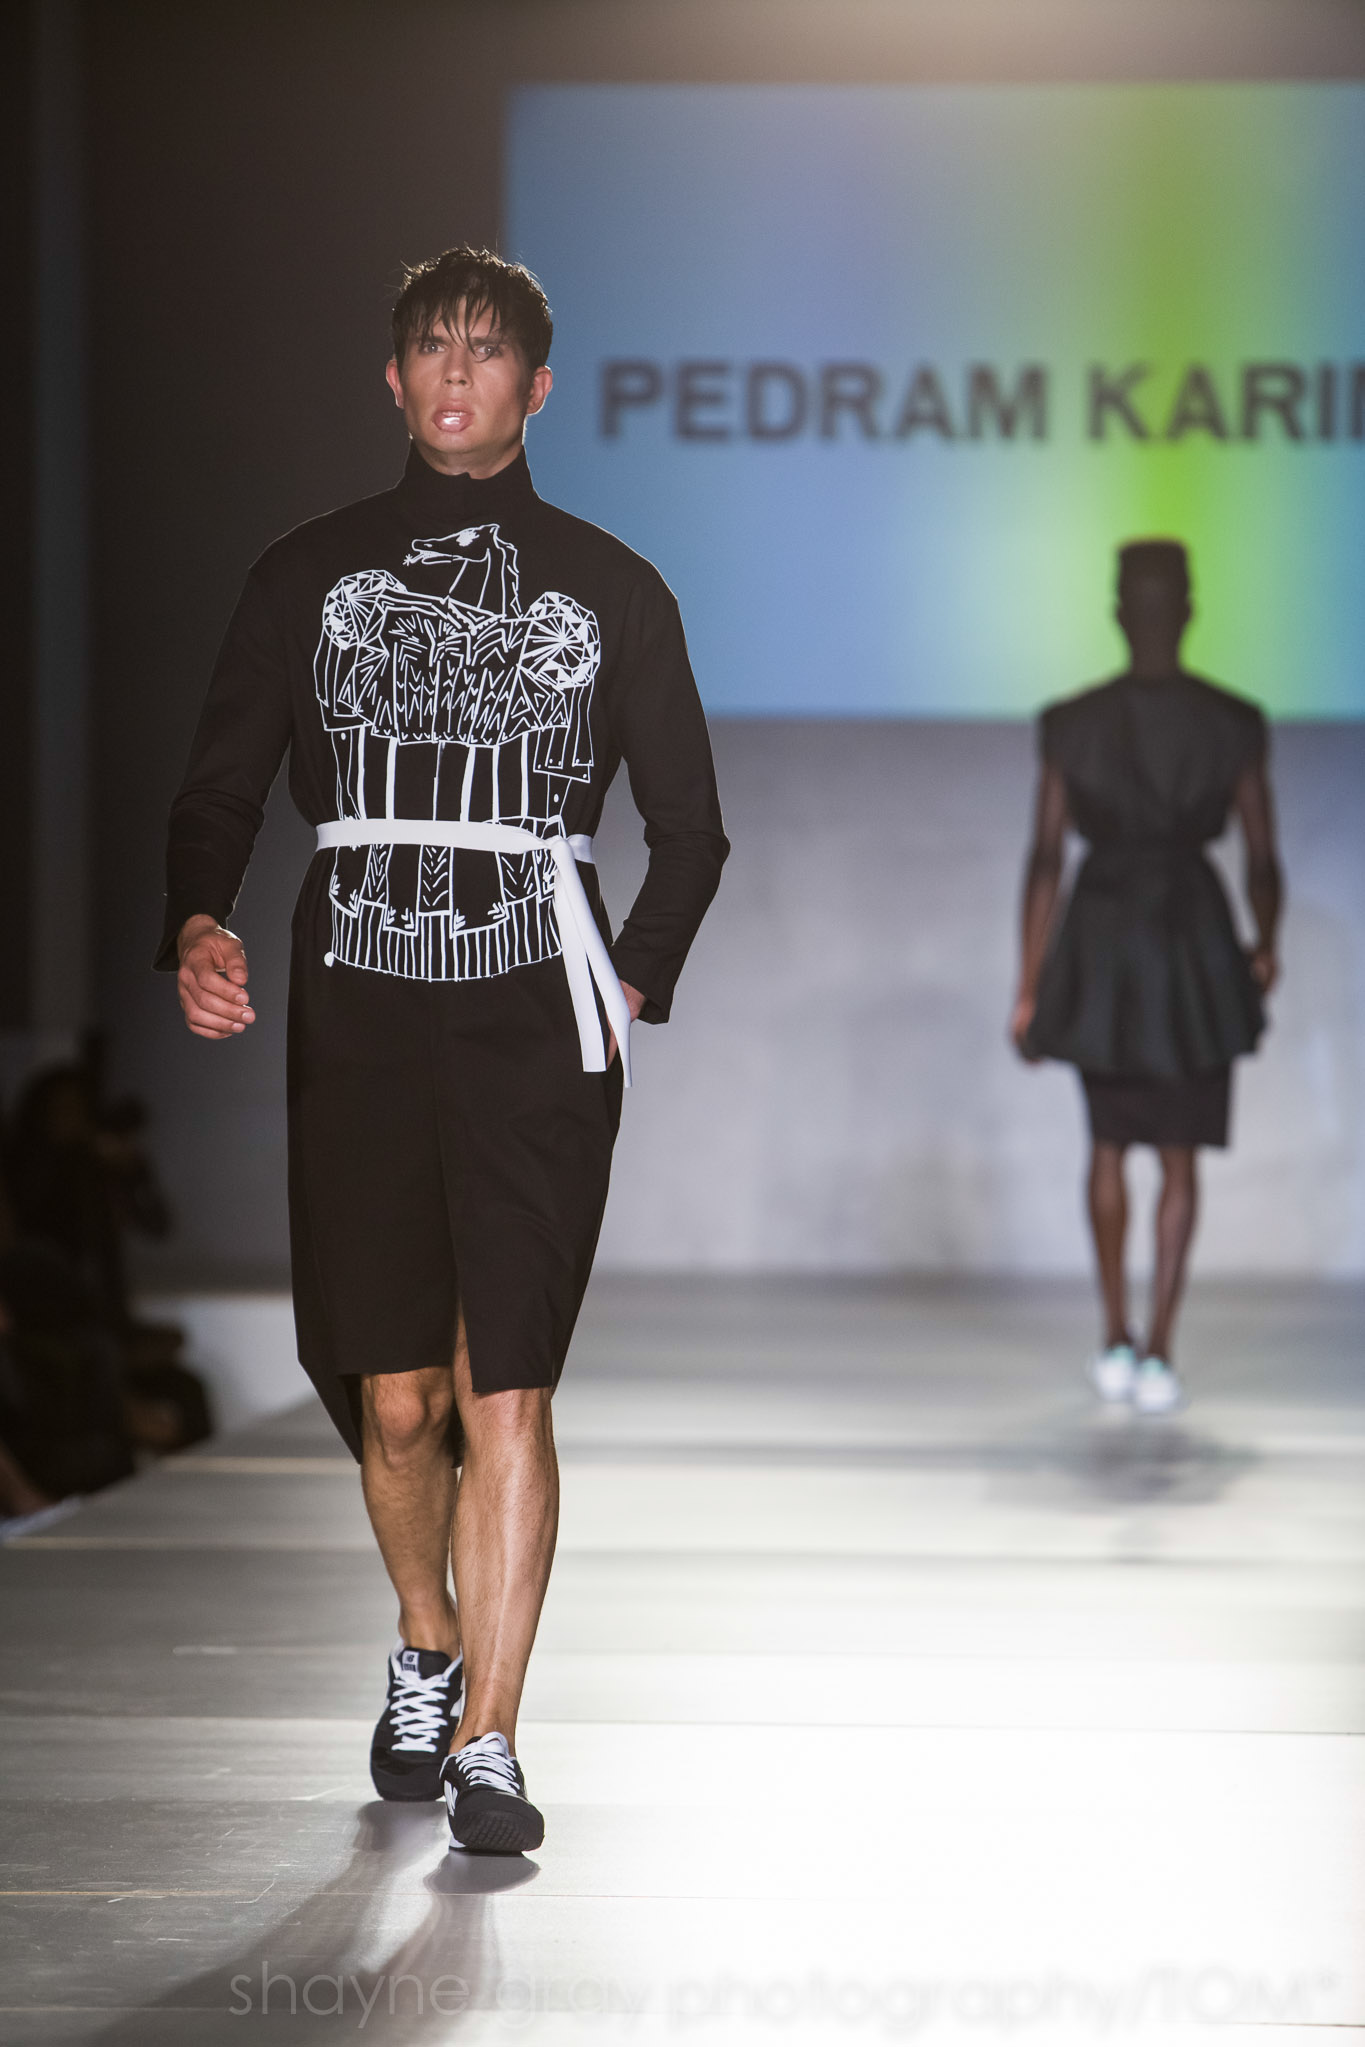 Shayne-Gray-Toronto-men's-fashion_week-TOM-Pedram-Karimi-8909.jpg